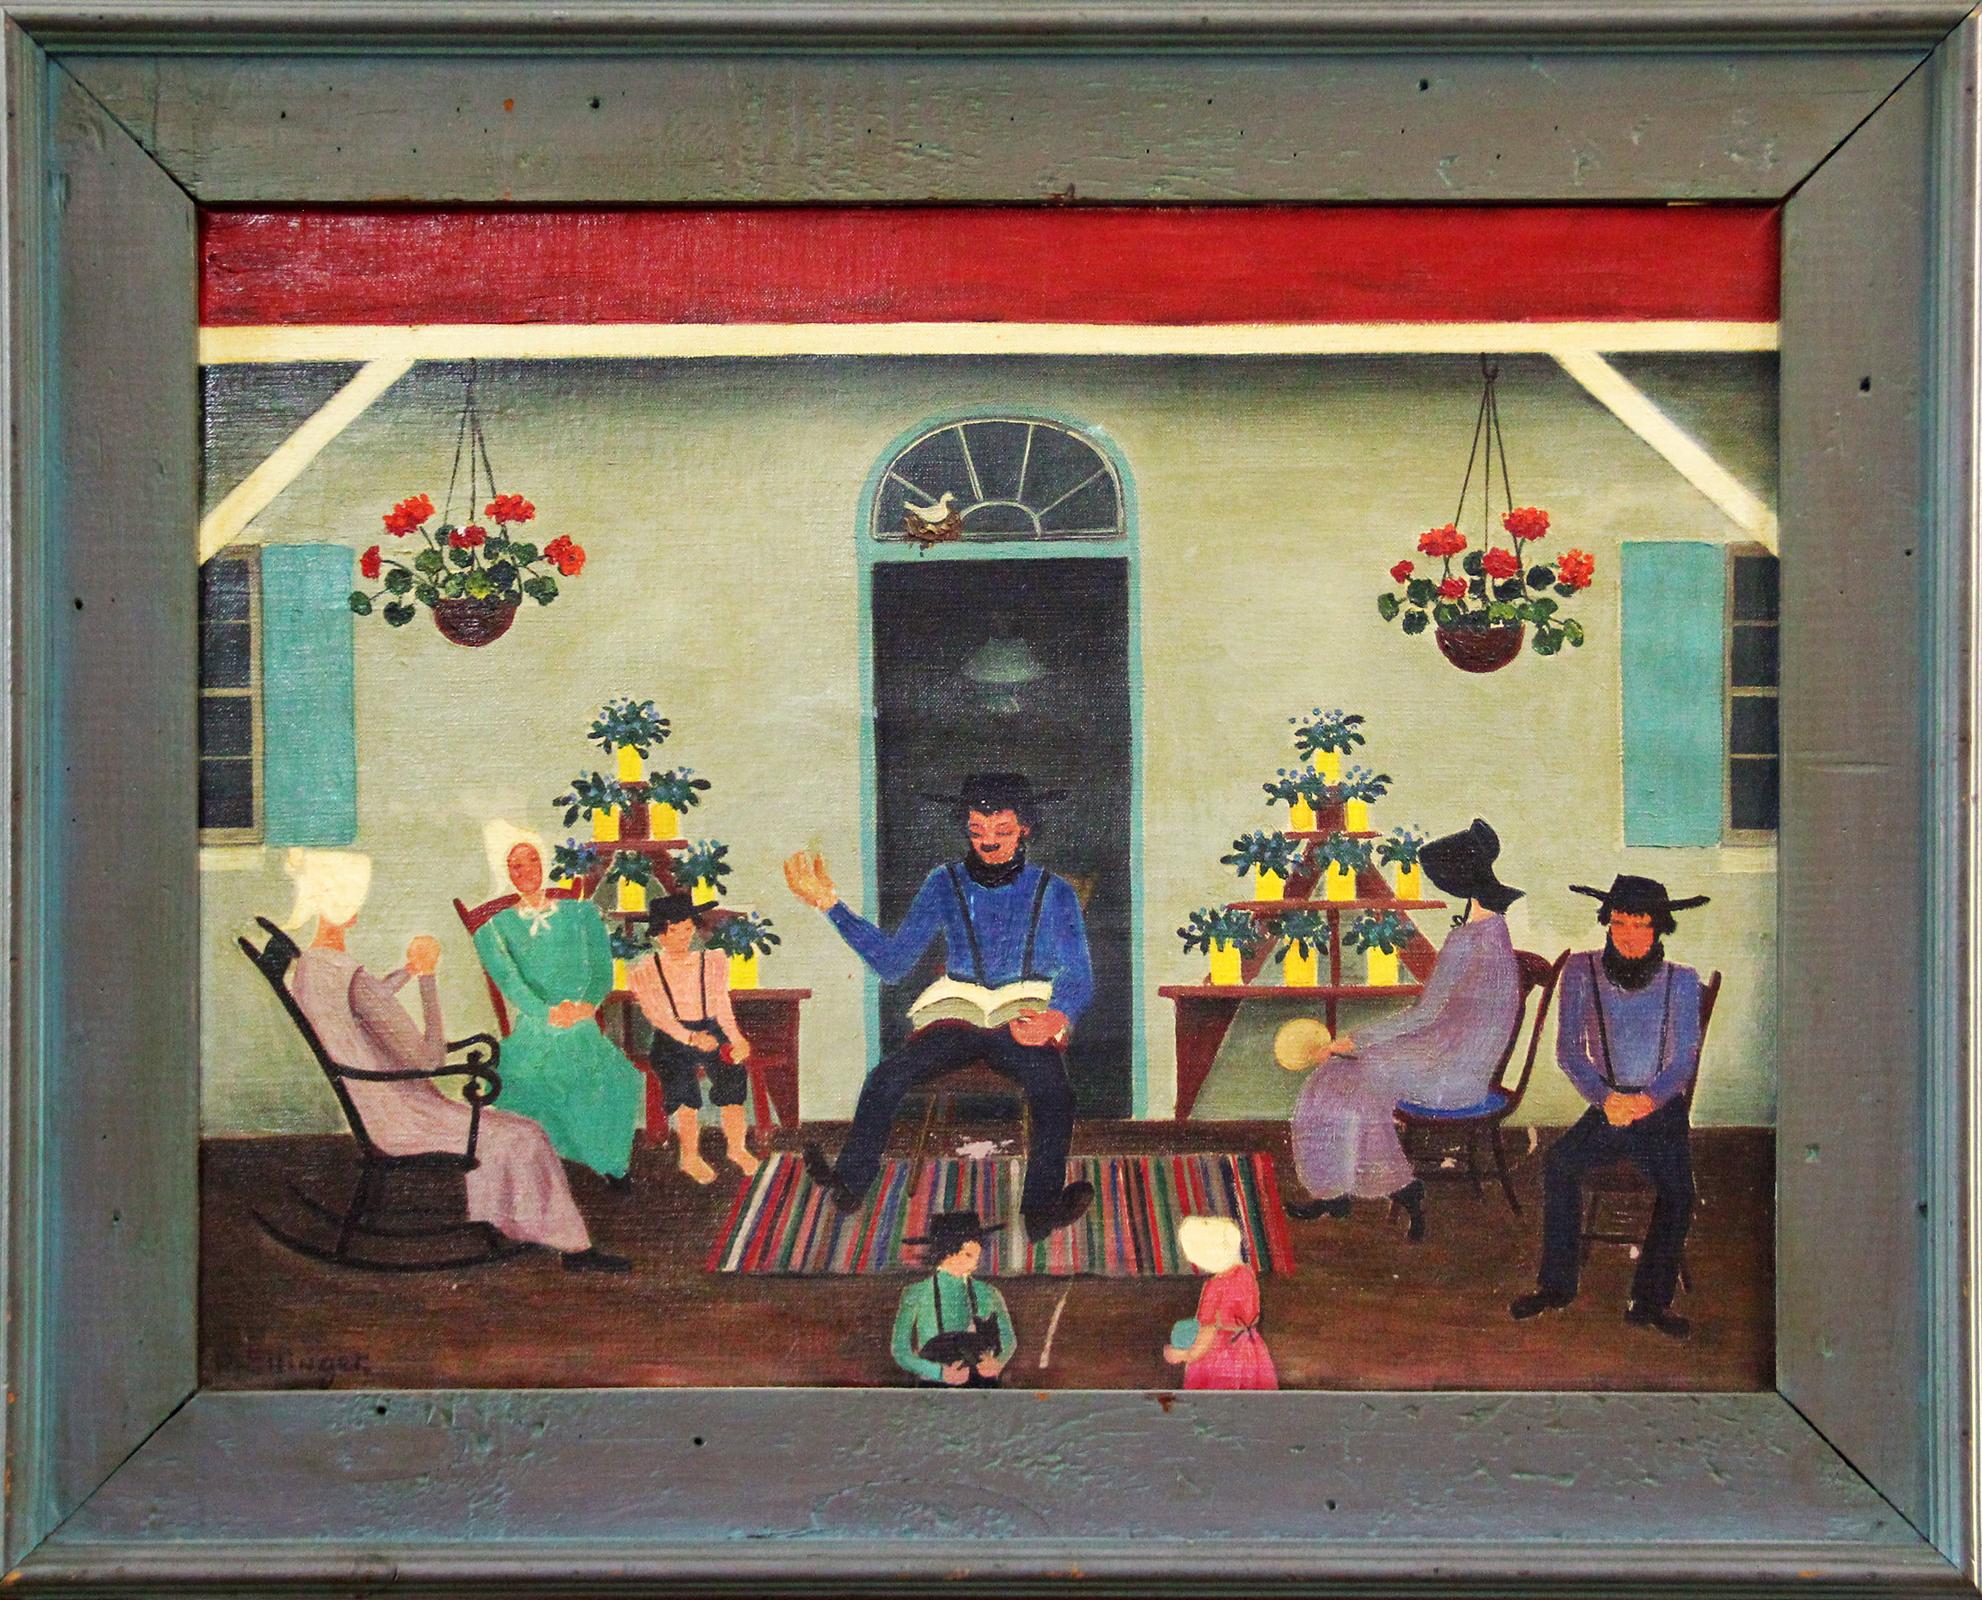 Day of Rest, Folk Art Family Scene, Pennsylvania Dutch, Amish Interior  - Painting by David Ellinger